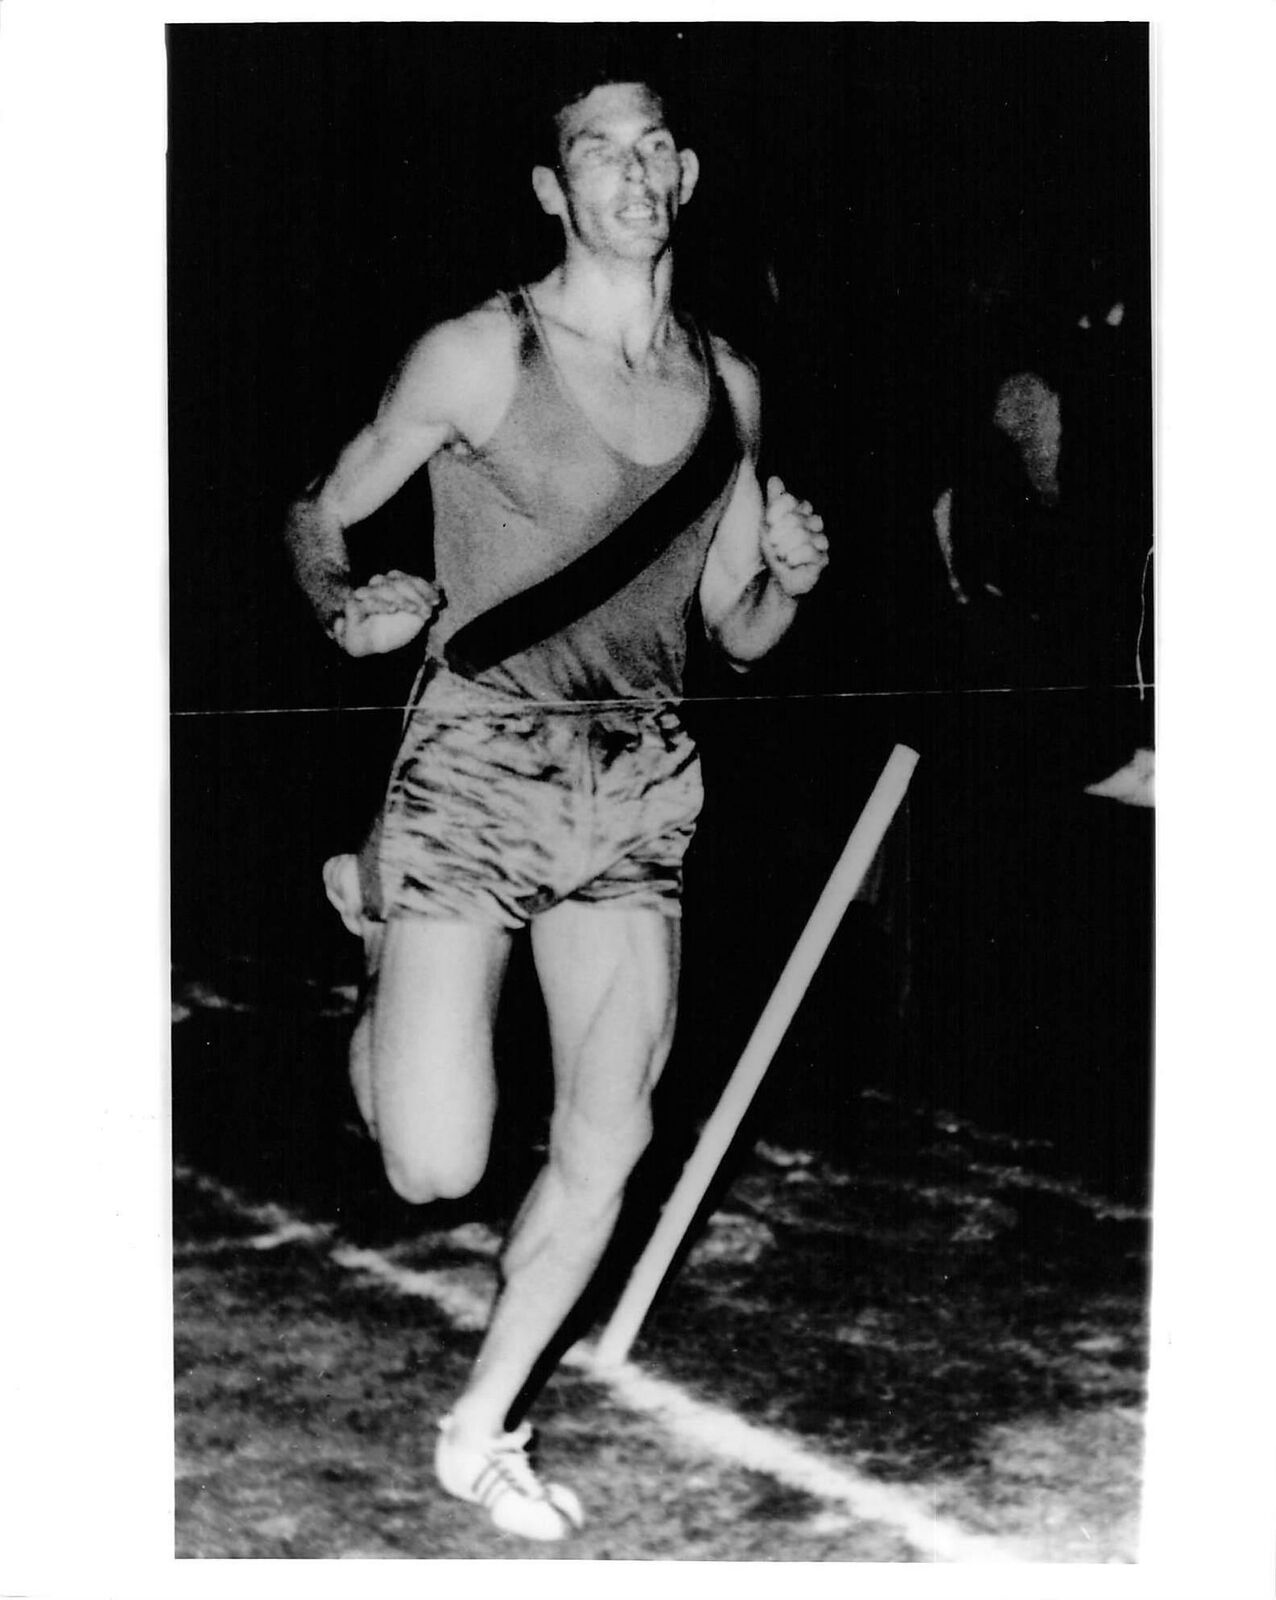 1962 Press Photo New Zealand Runner Breaks Tape, New Record PETER SNELL race kg